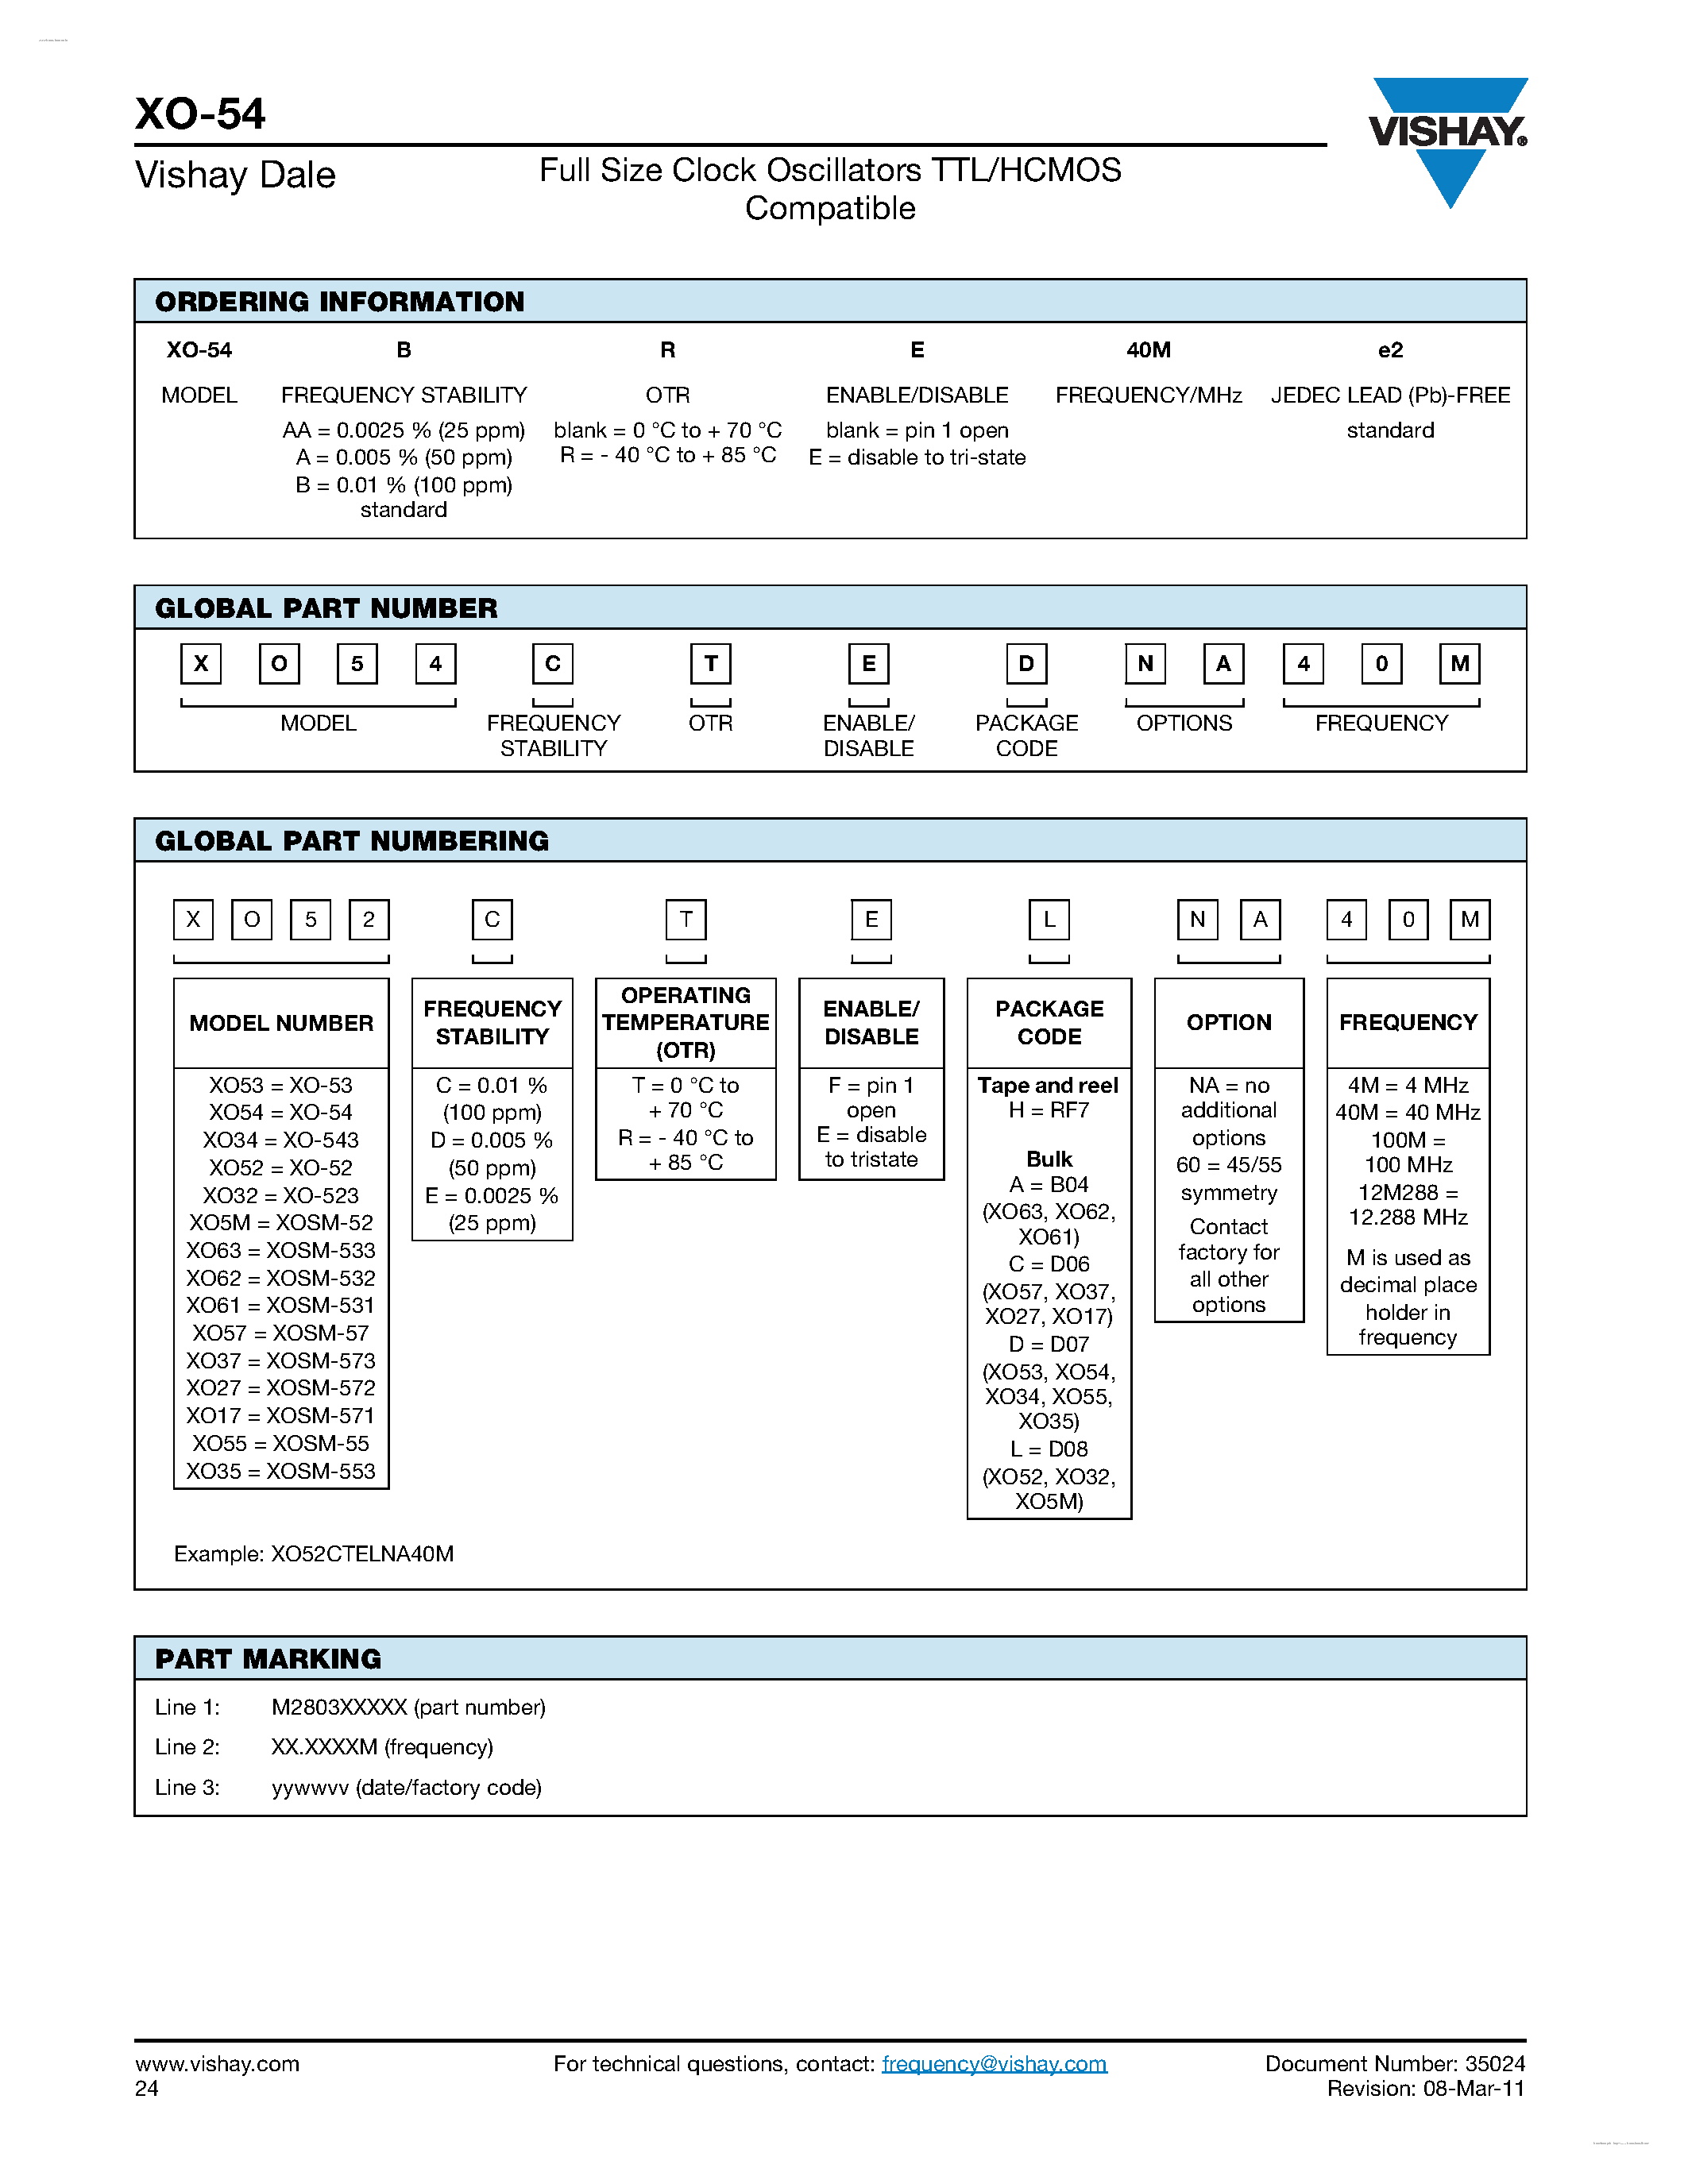 Datasheet XO-54 - Full Size Clock Oscillators TTL/HCMOS Compatible page 2